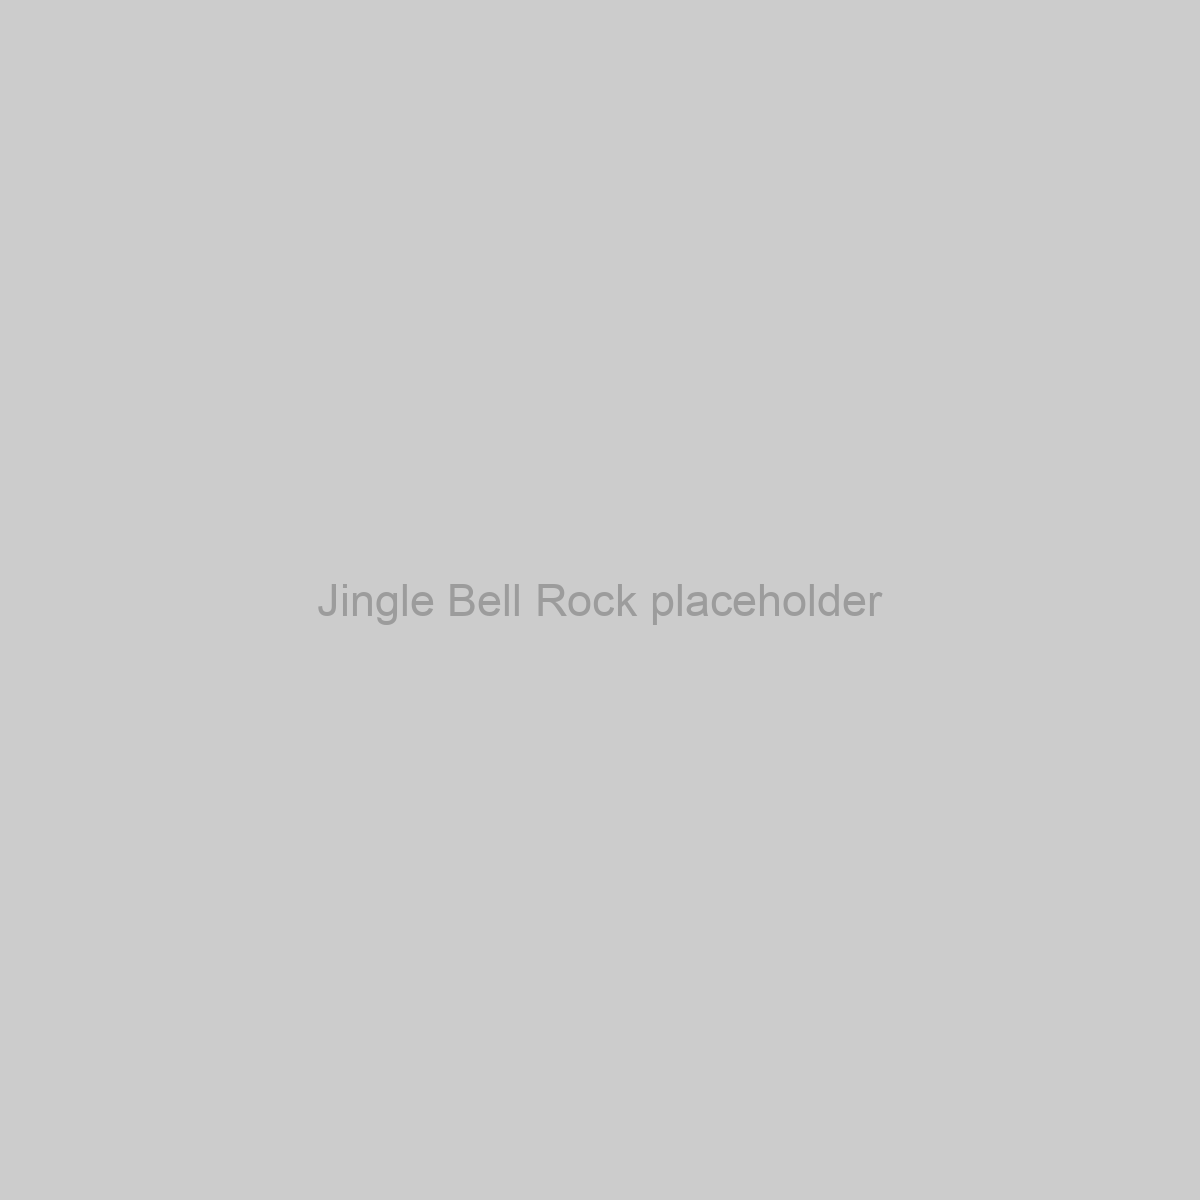 Jingle Bell Rock Placeholder Image